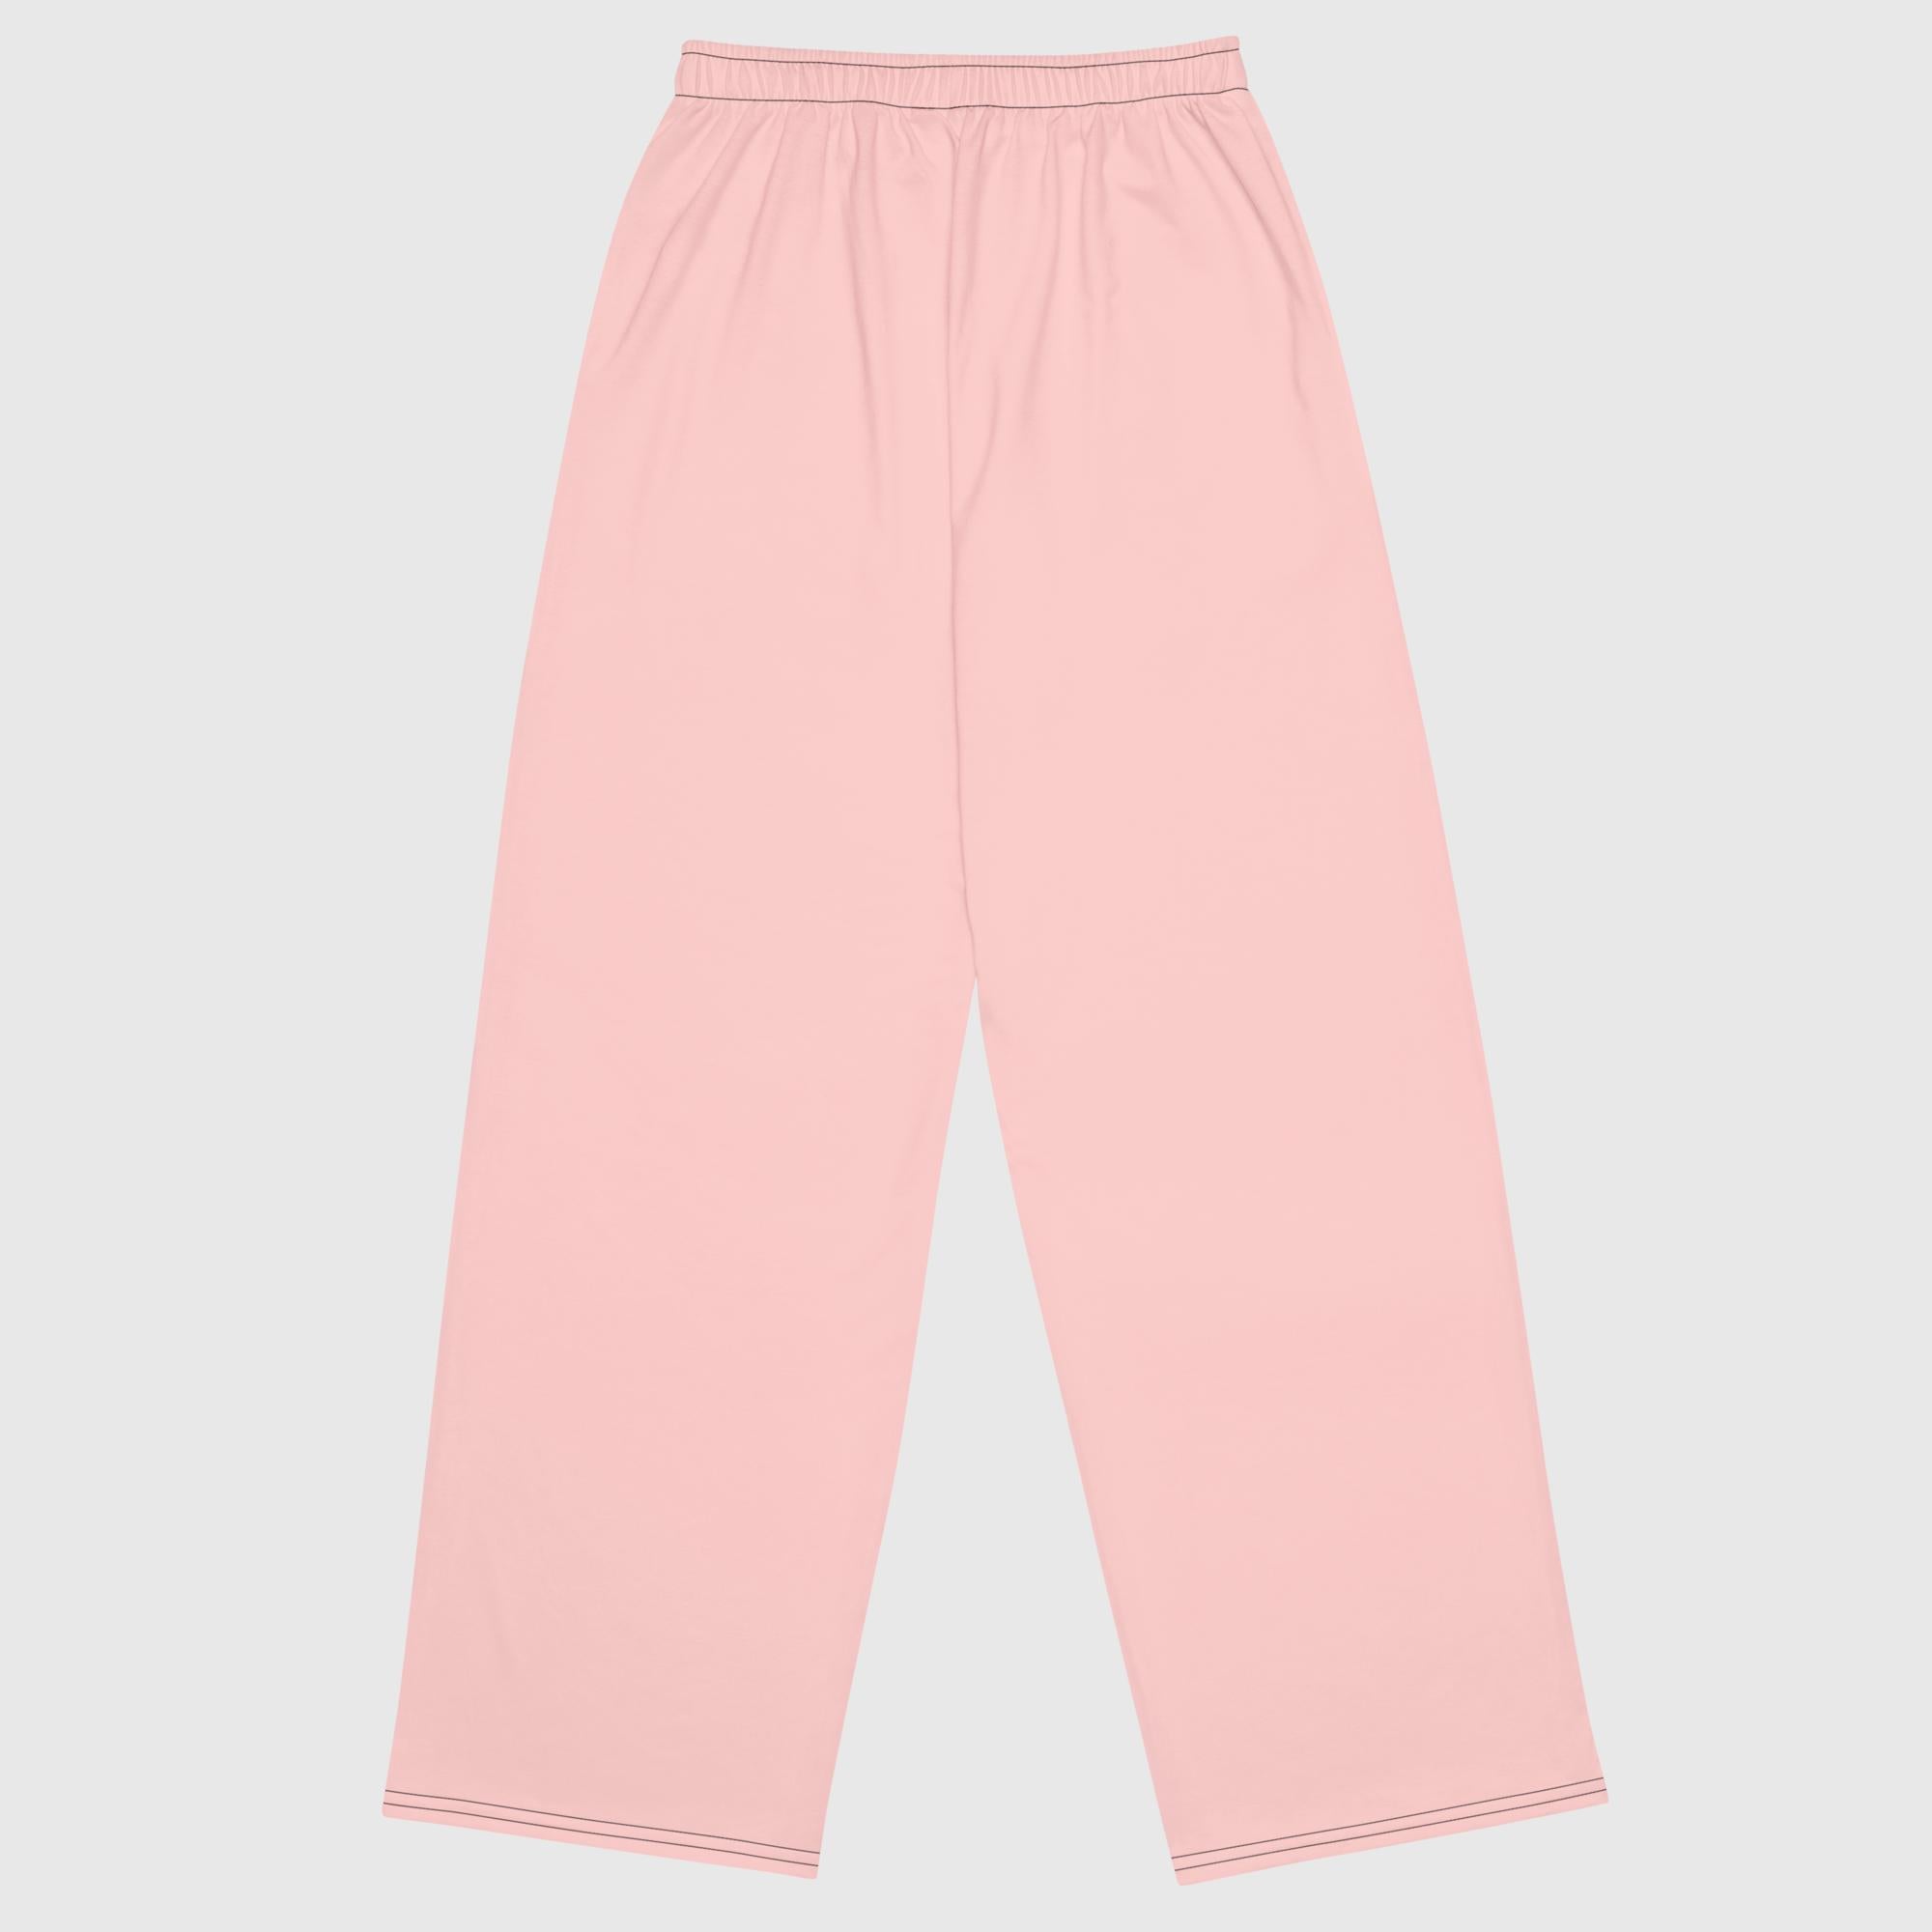 Women's wide-leg pants - Pink - Sunset Harbor Clothing